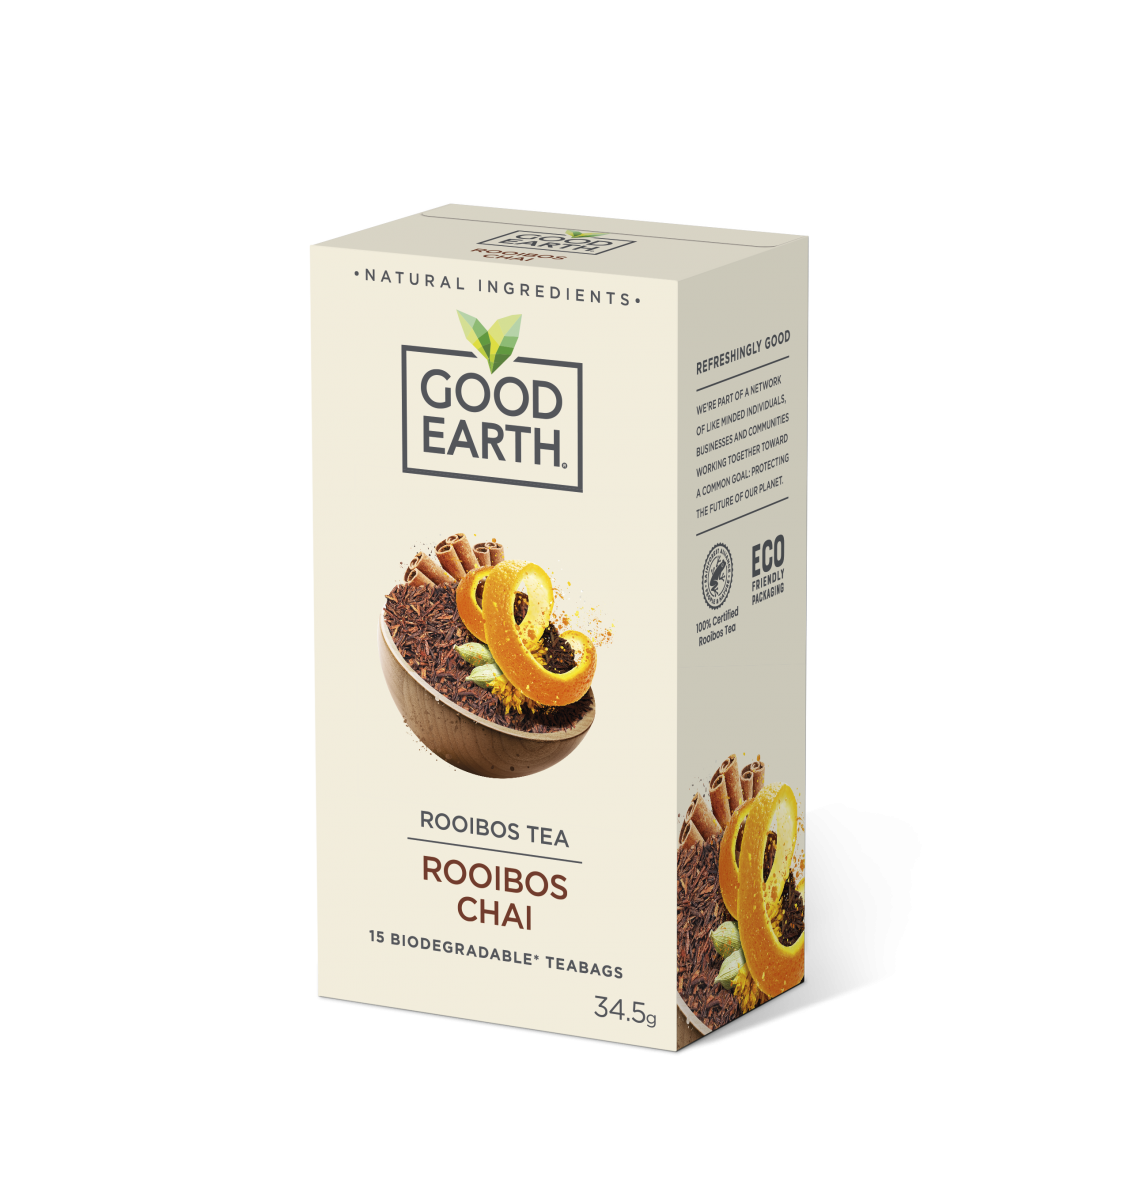 Good Earth Rooibos Tea - Black Box Product Reviews